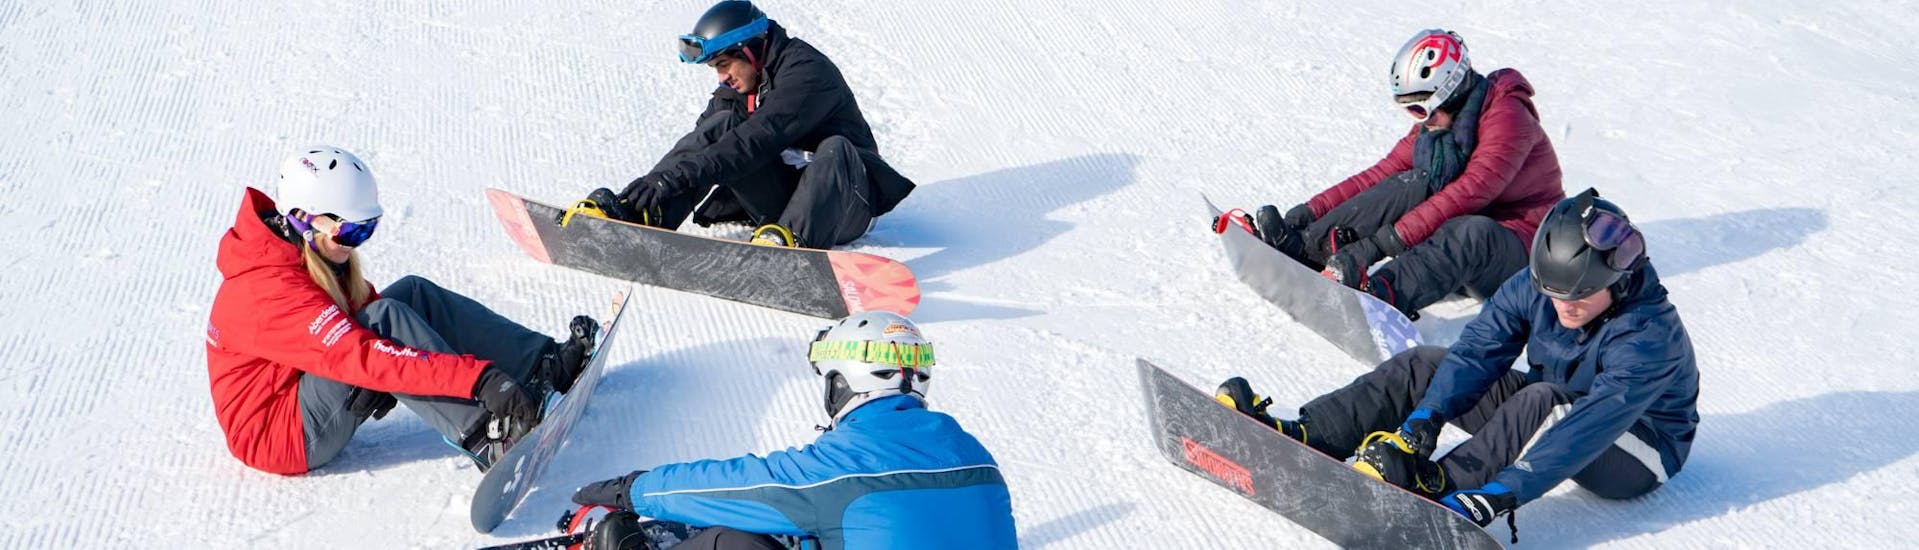 Cours de snowboard Adultes + Équipement & Transfert depuis Interlaken.